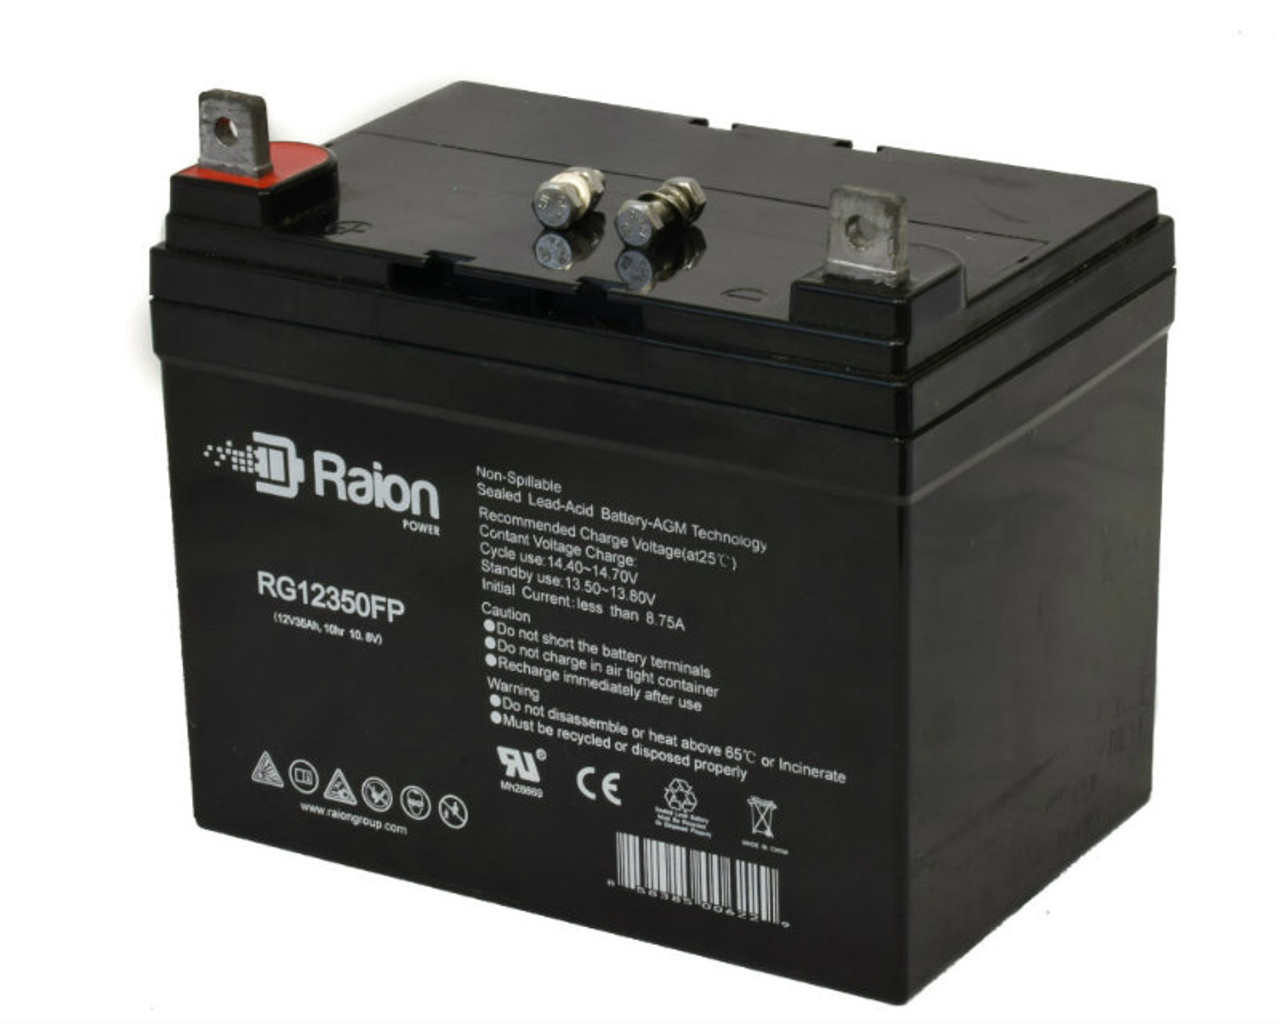 Raion Power Replacement 12V 35Ah RG12350FP Battery for Grasshopper 900 Series